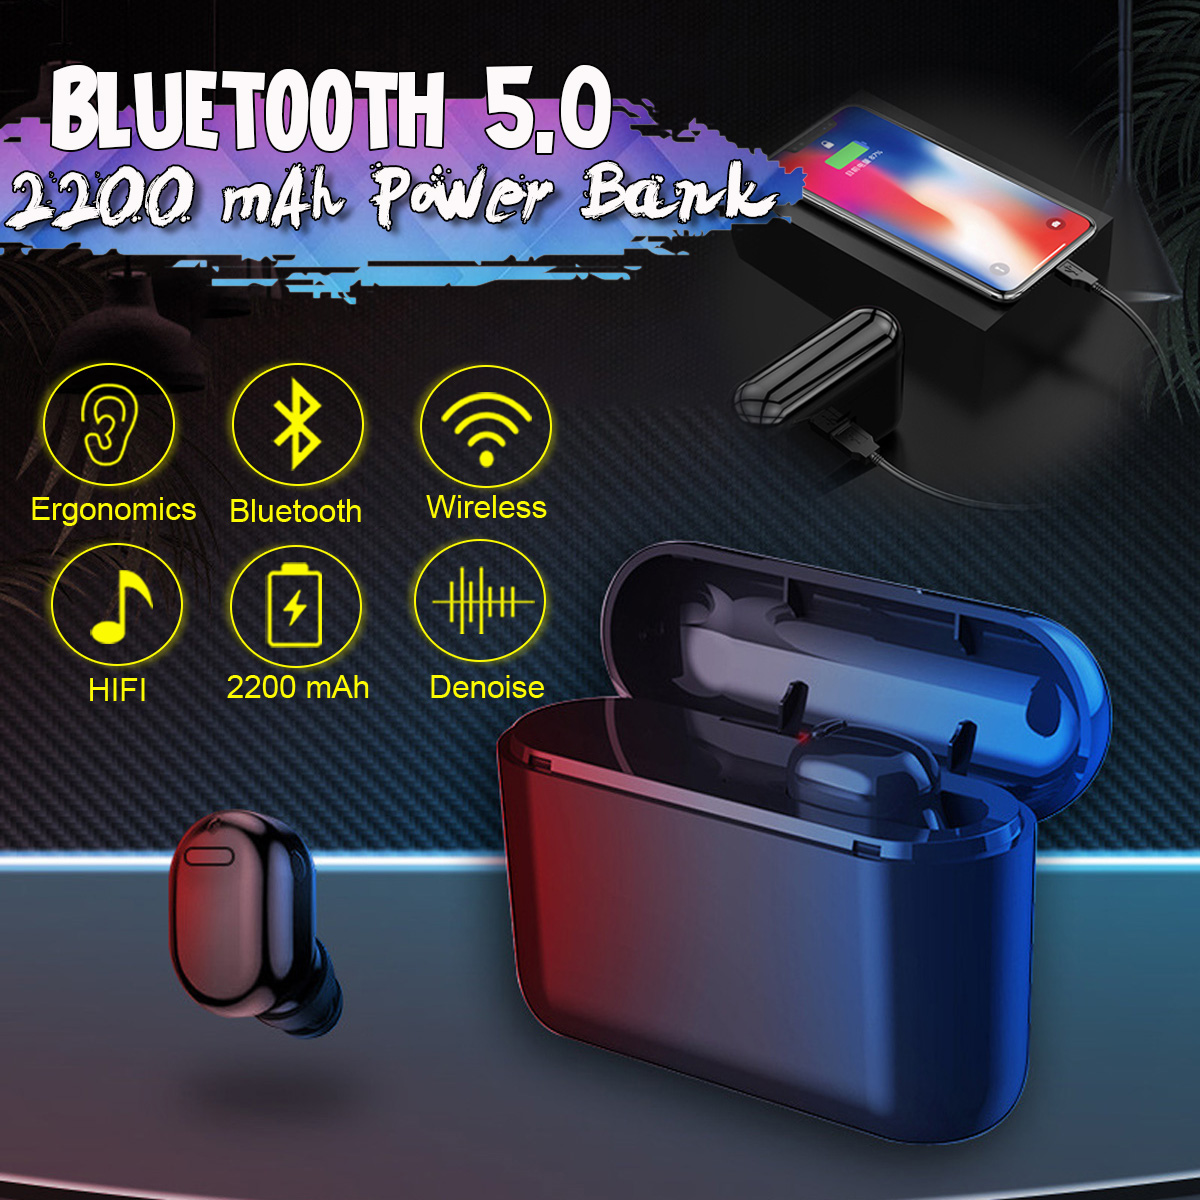 bluetooth-50-TWS-Wireless-Headphones-Stereo-Earphone-Earbuds-with-2200mAh-Charging-Box-Power-Bank-1429903-1